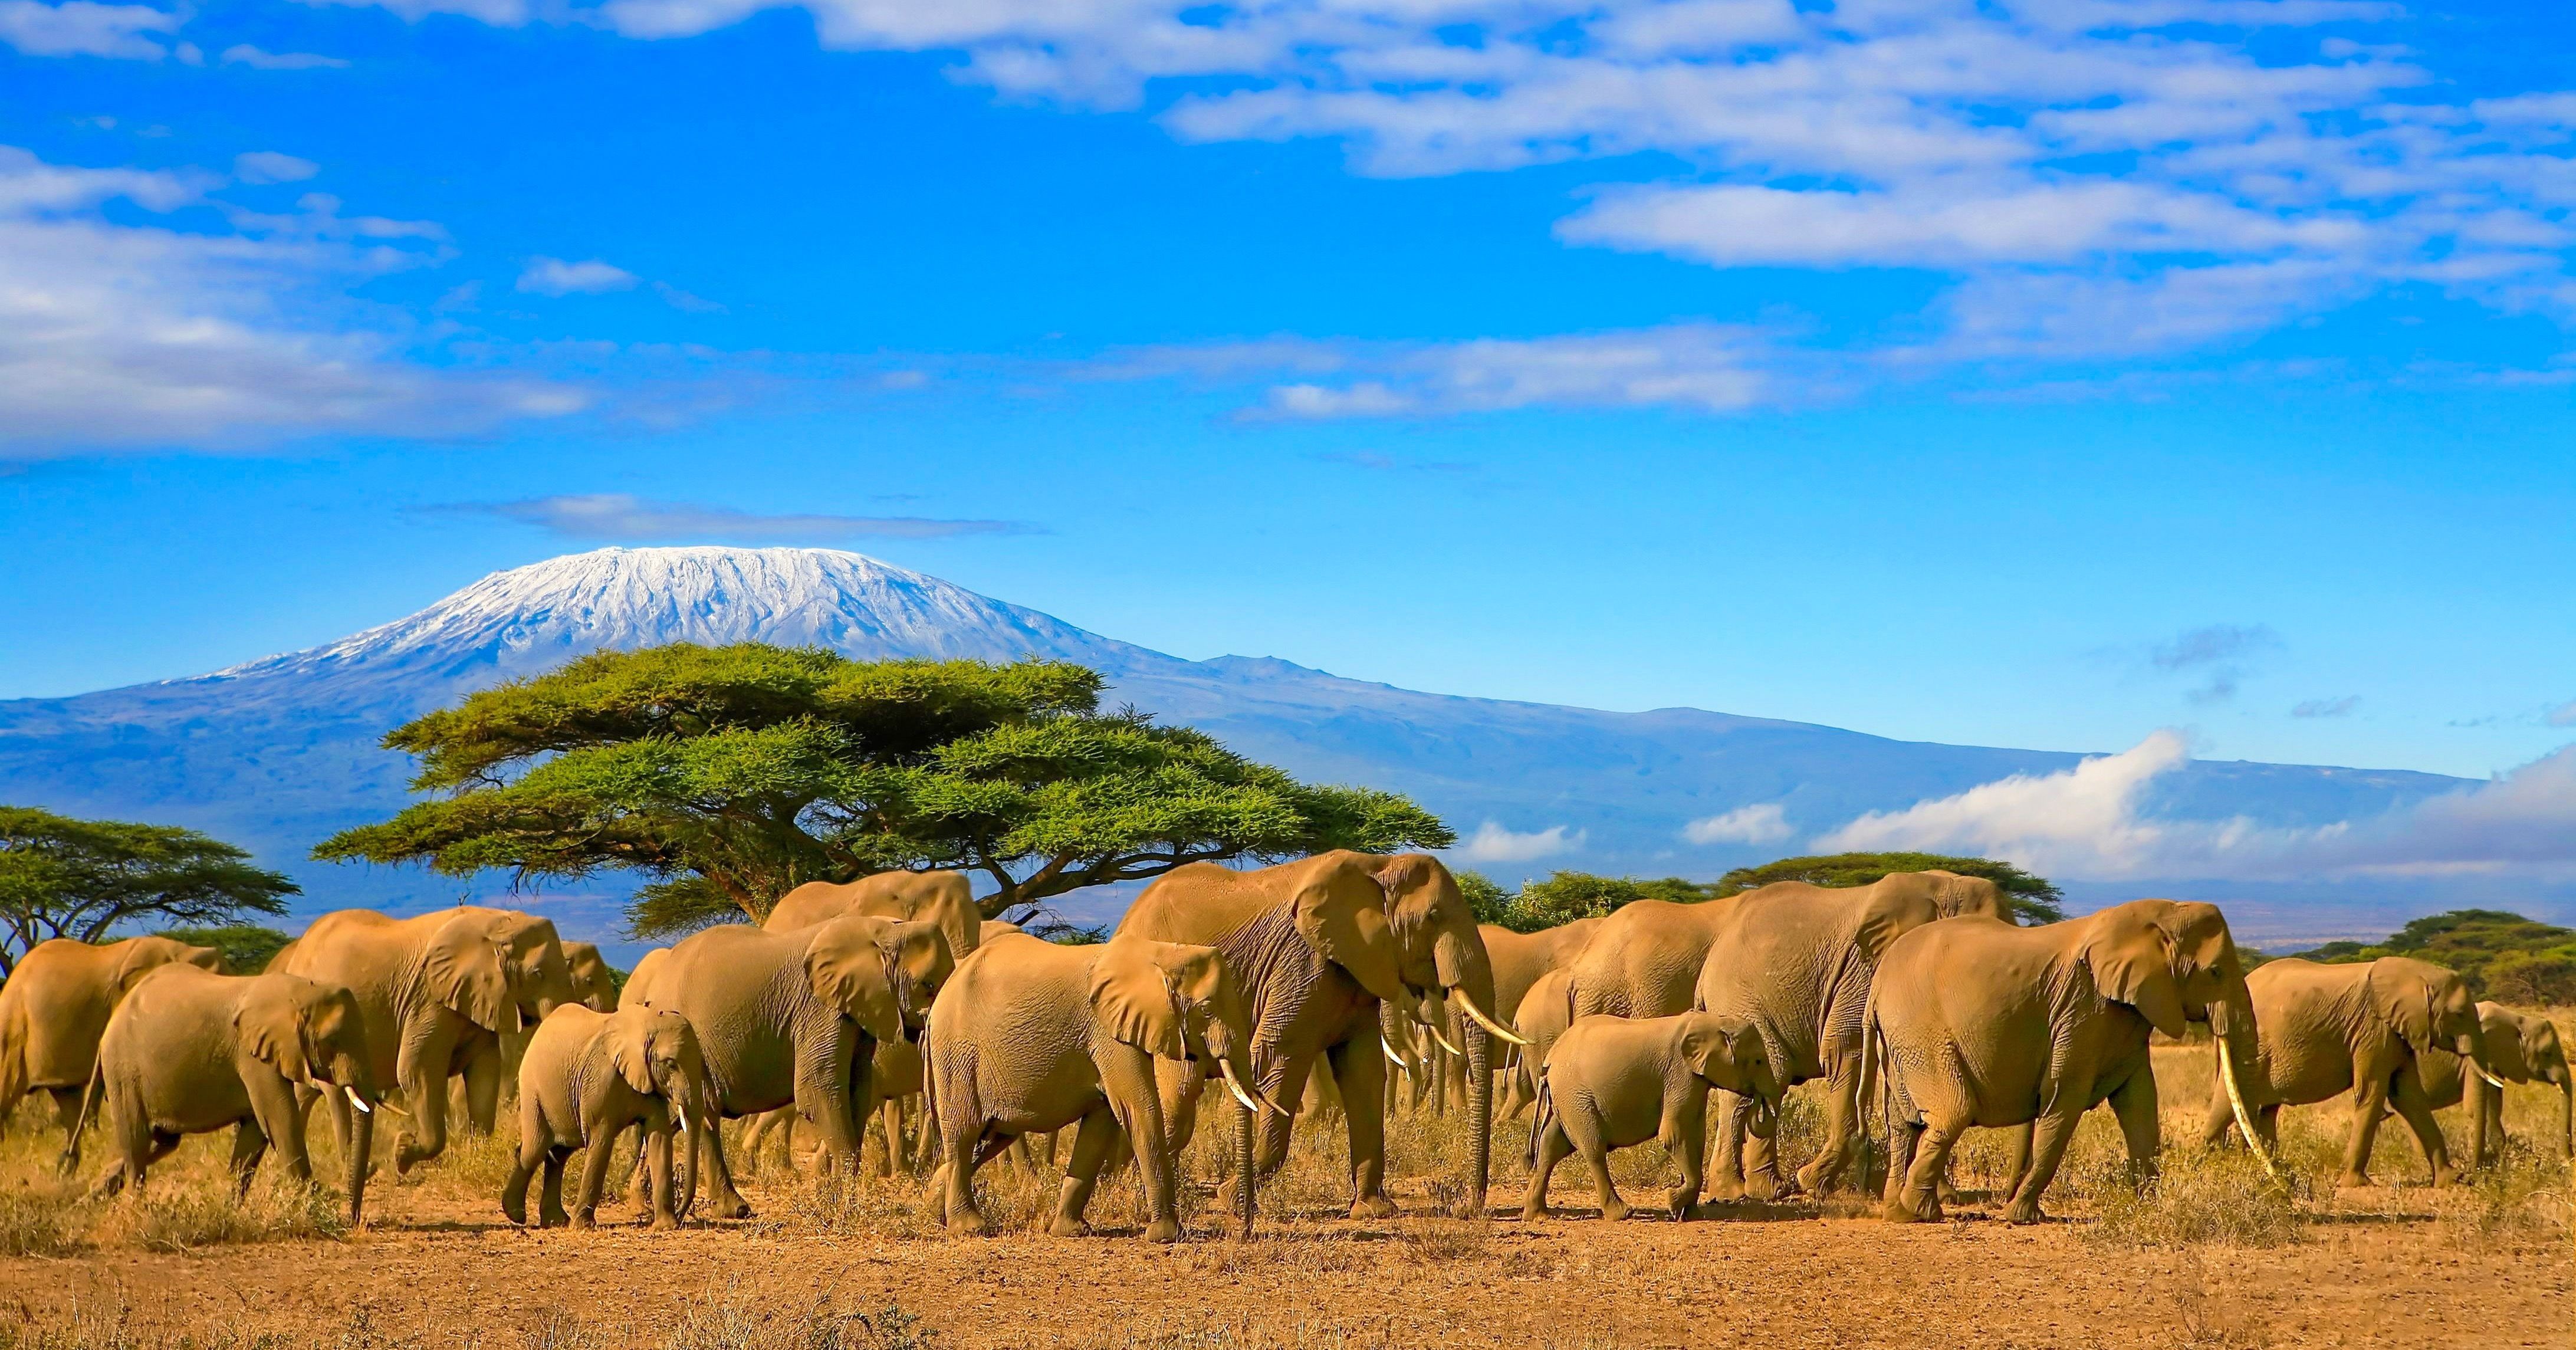 Kenya elephants and landscape